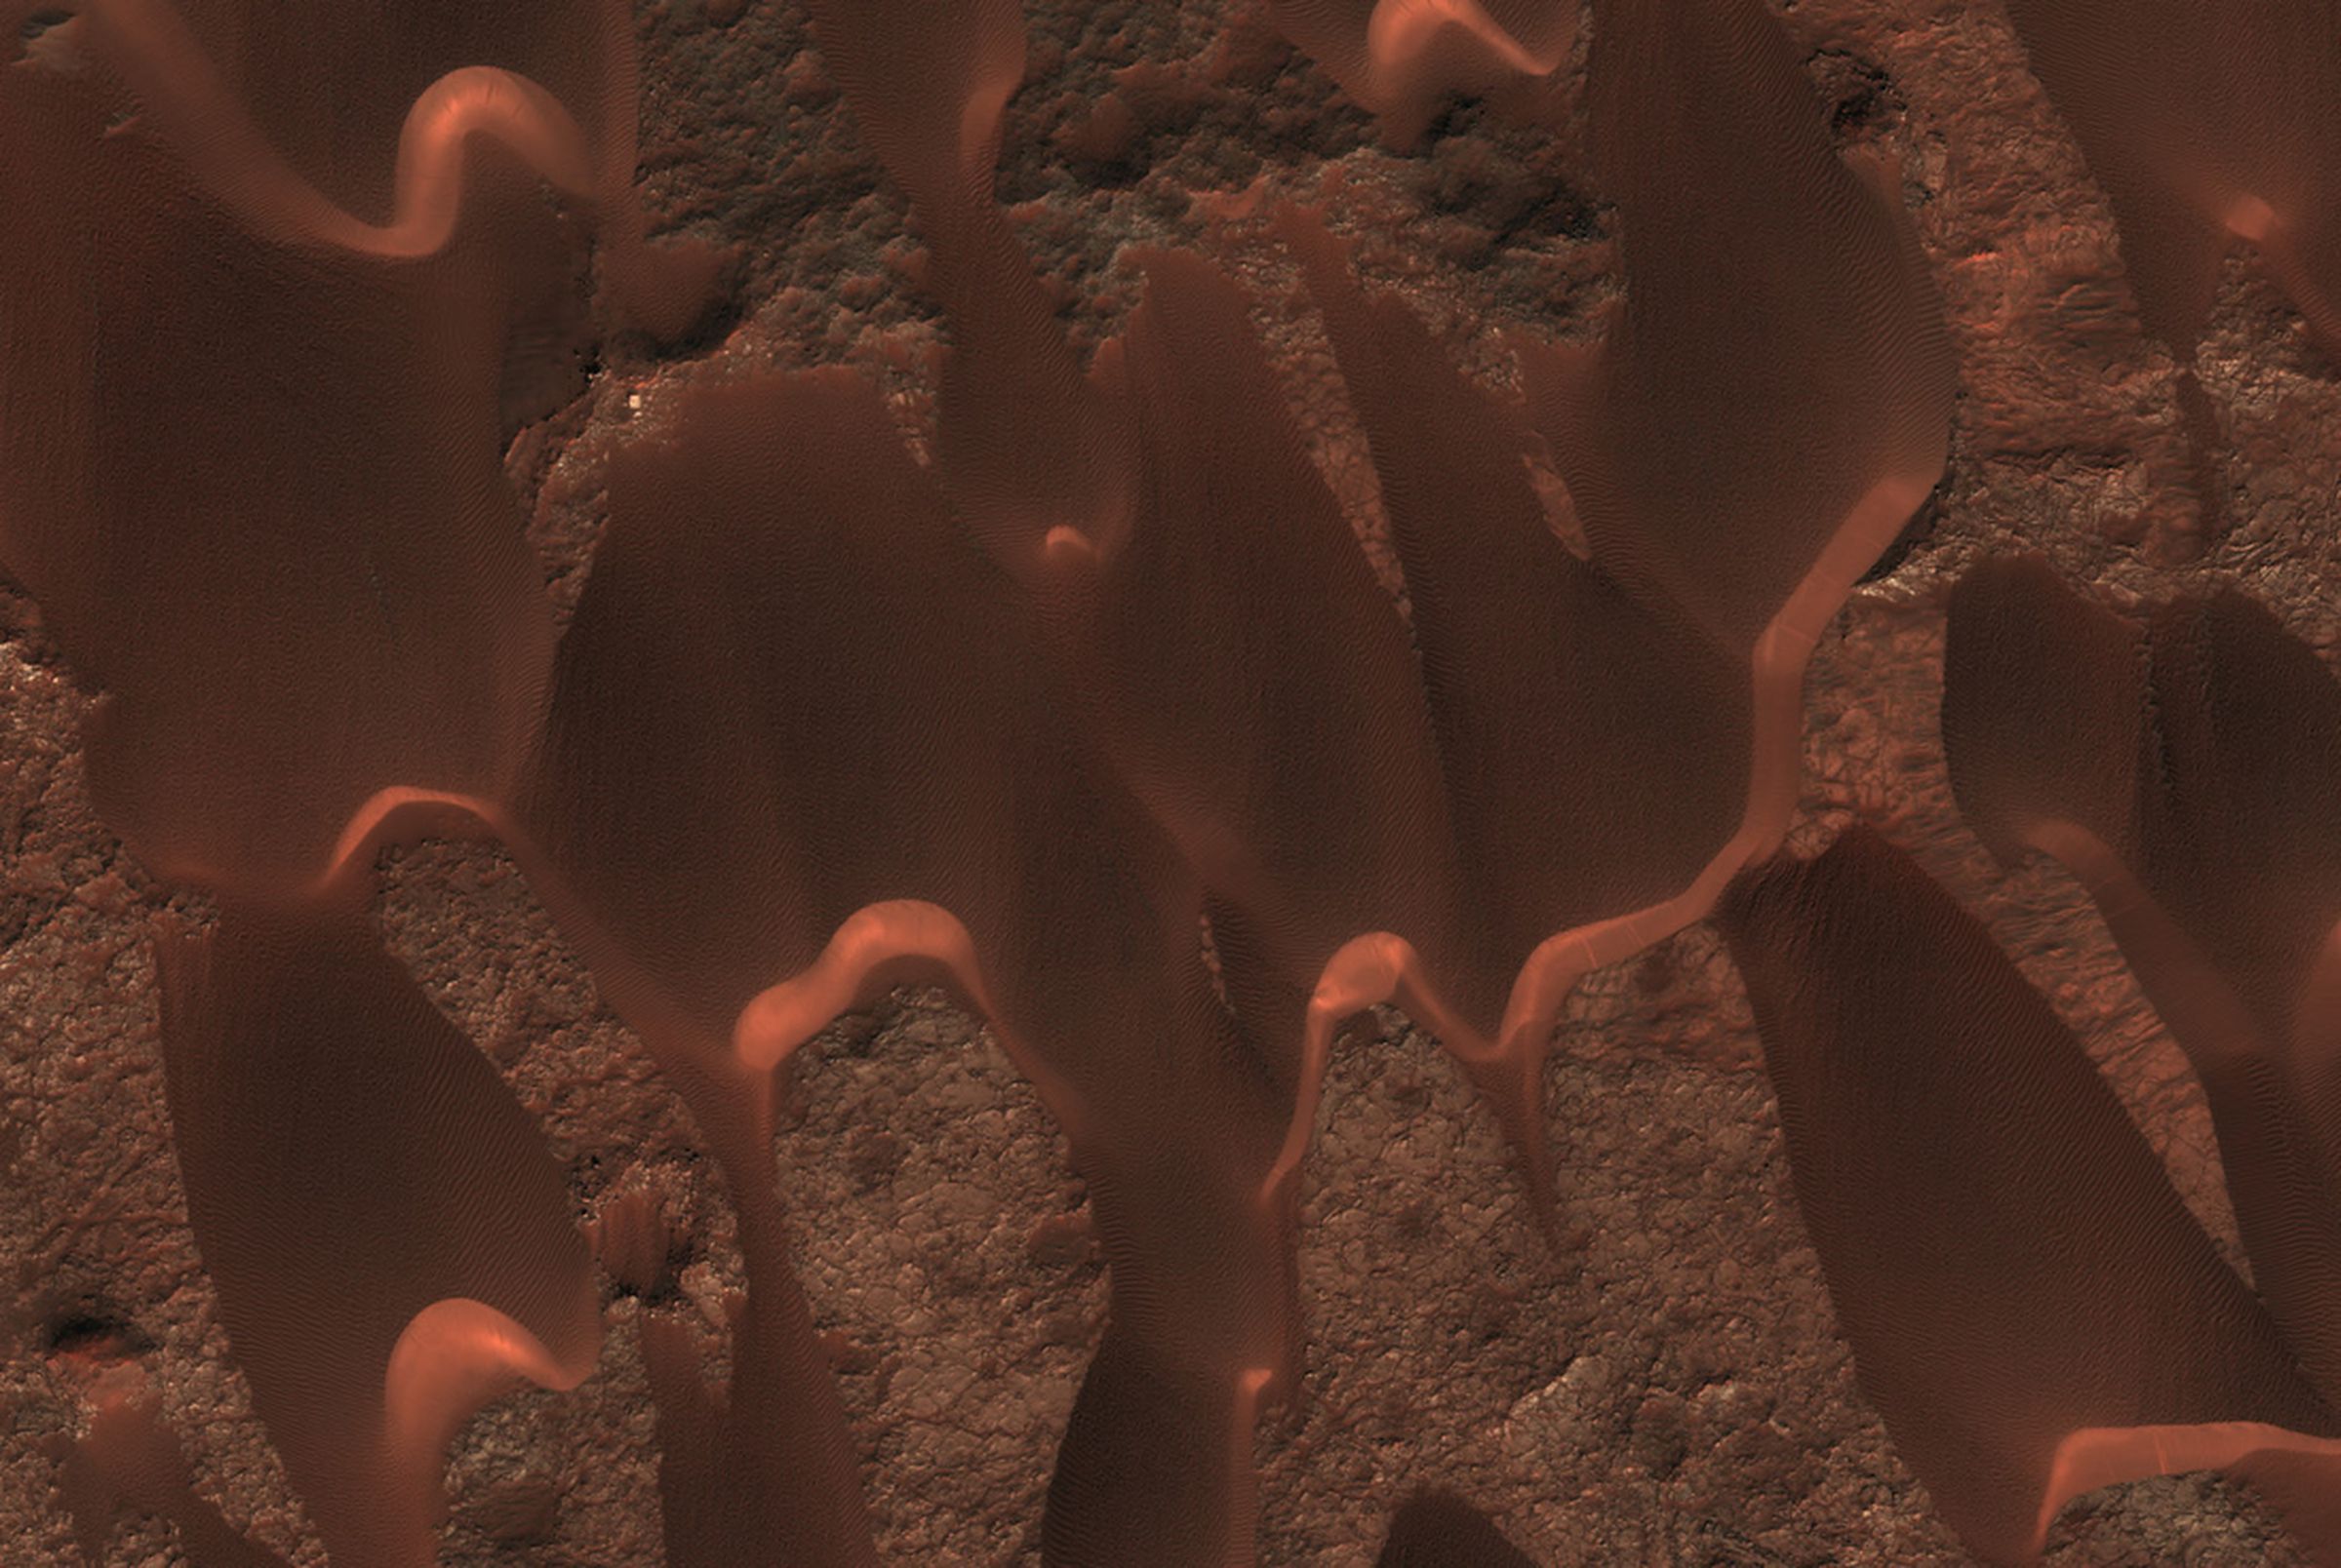 Mars HiRISE images